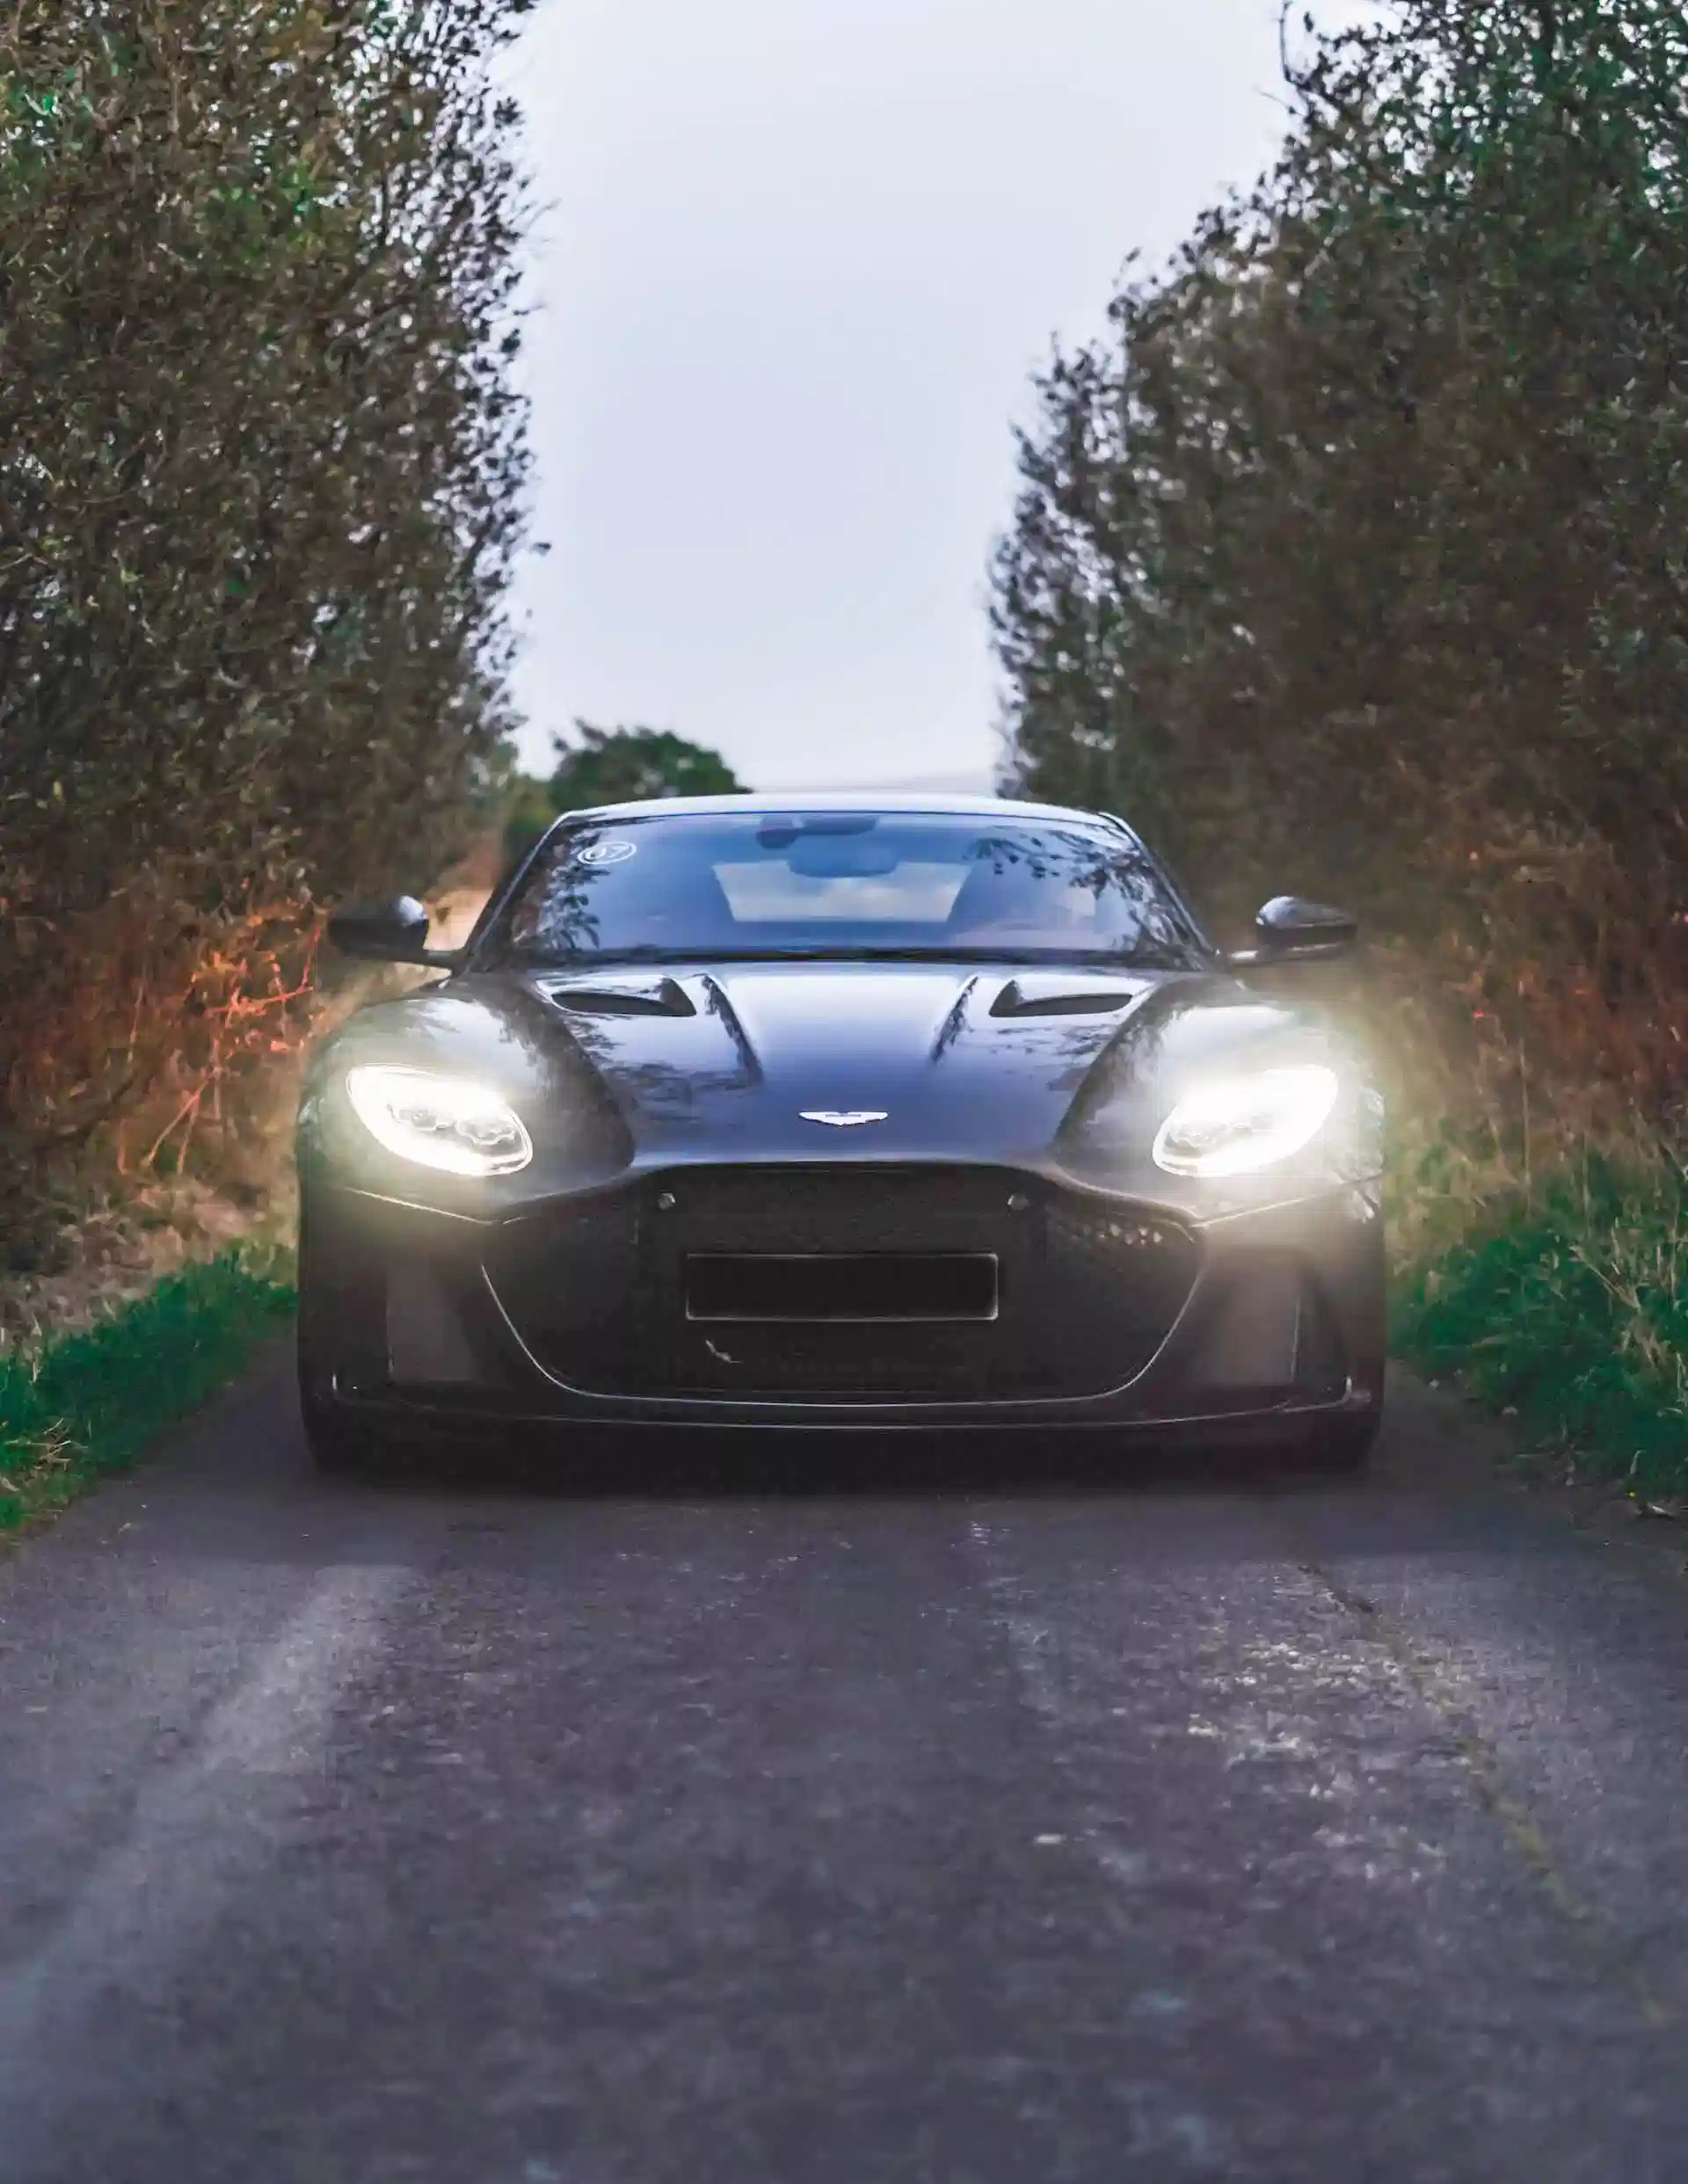 Image of an Aston Martin Car